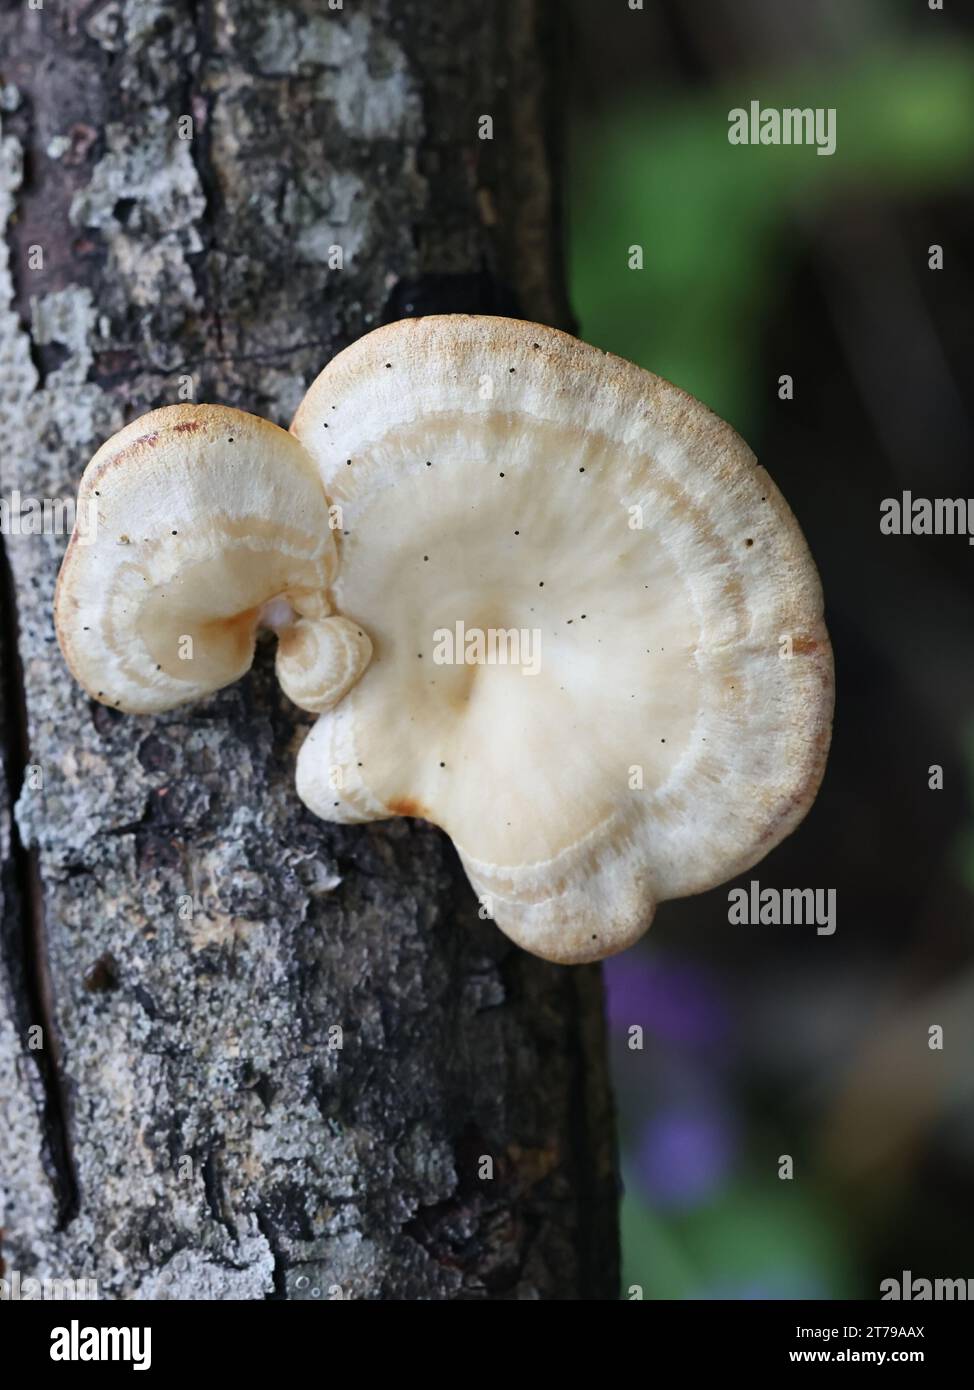 Neofavolus suavissimus, also known as Lentinus suavissimus, an oysterling mushroom from Finland, no common English name Stock Photo